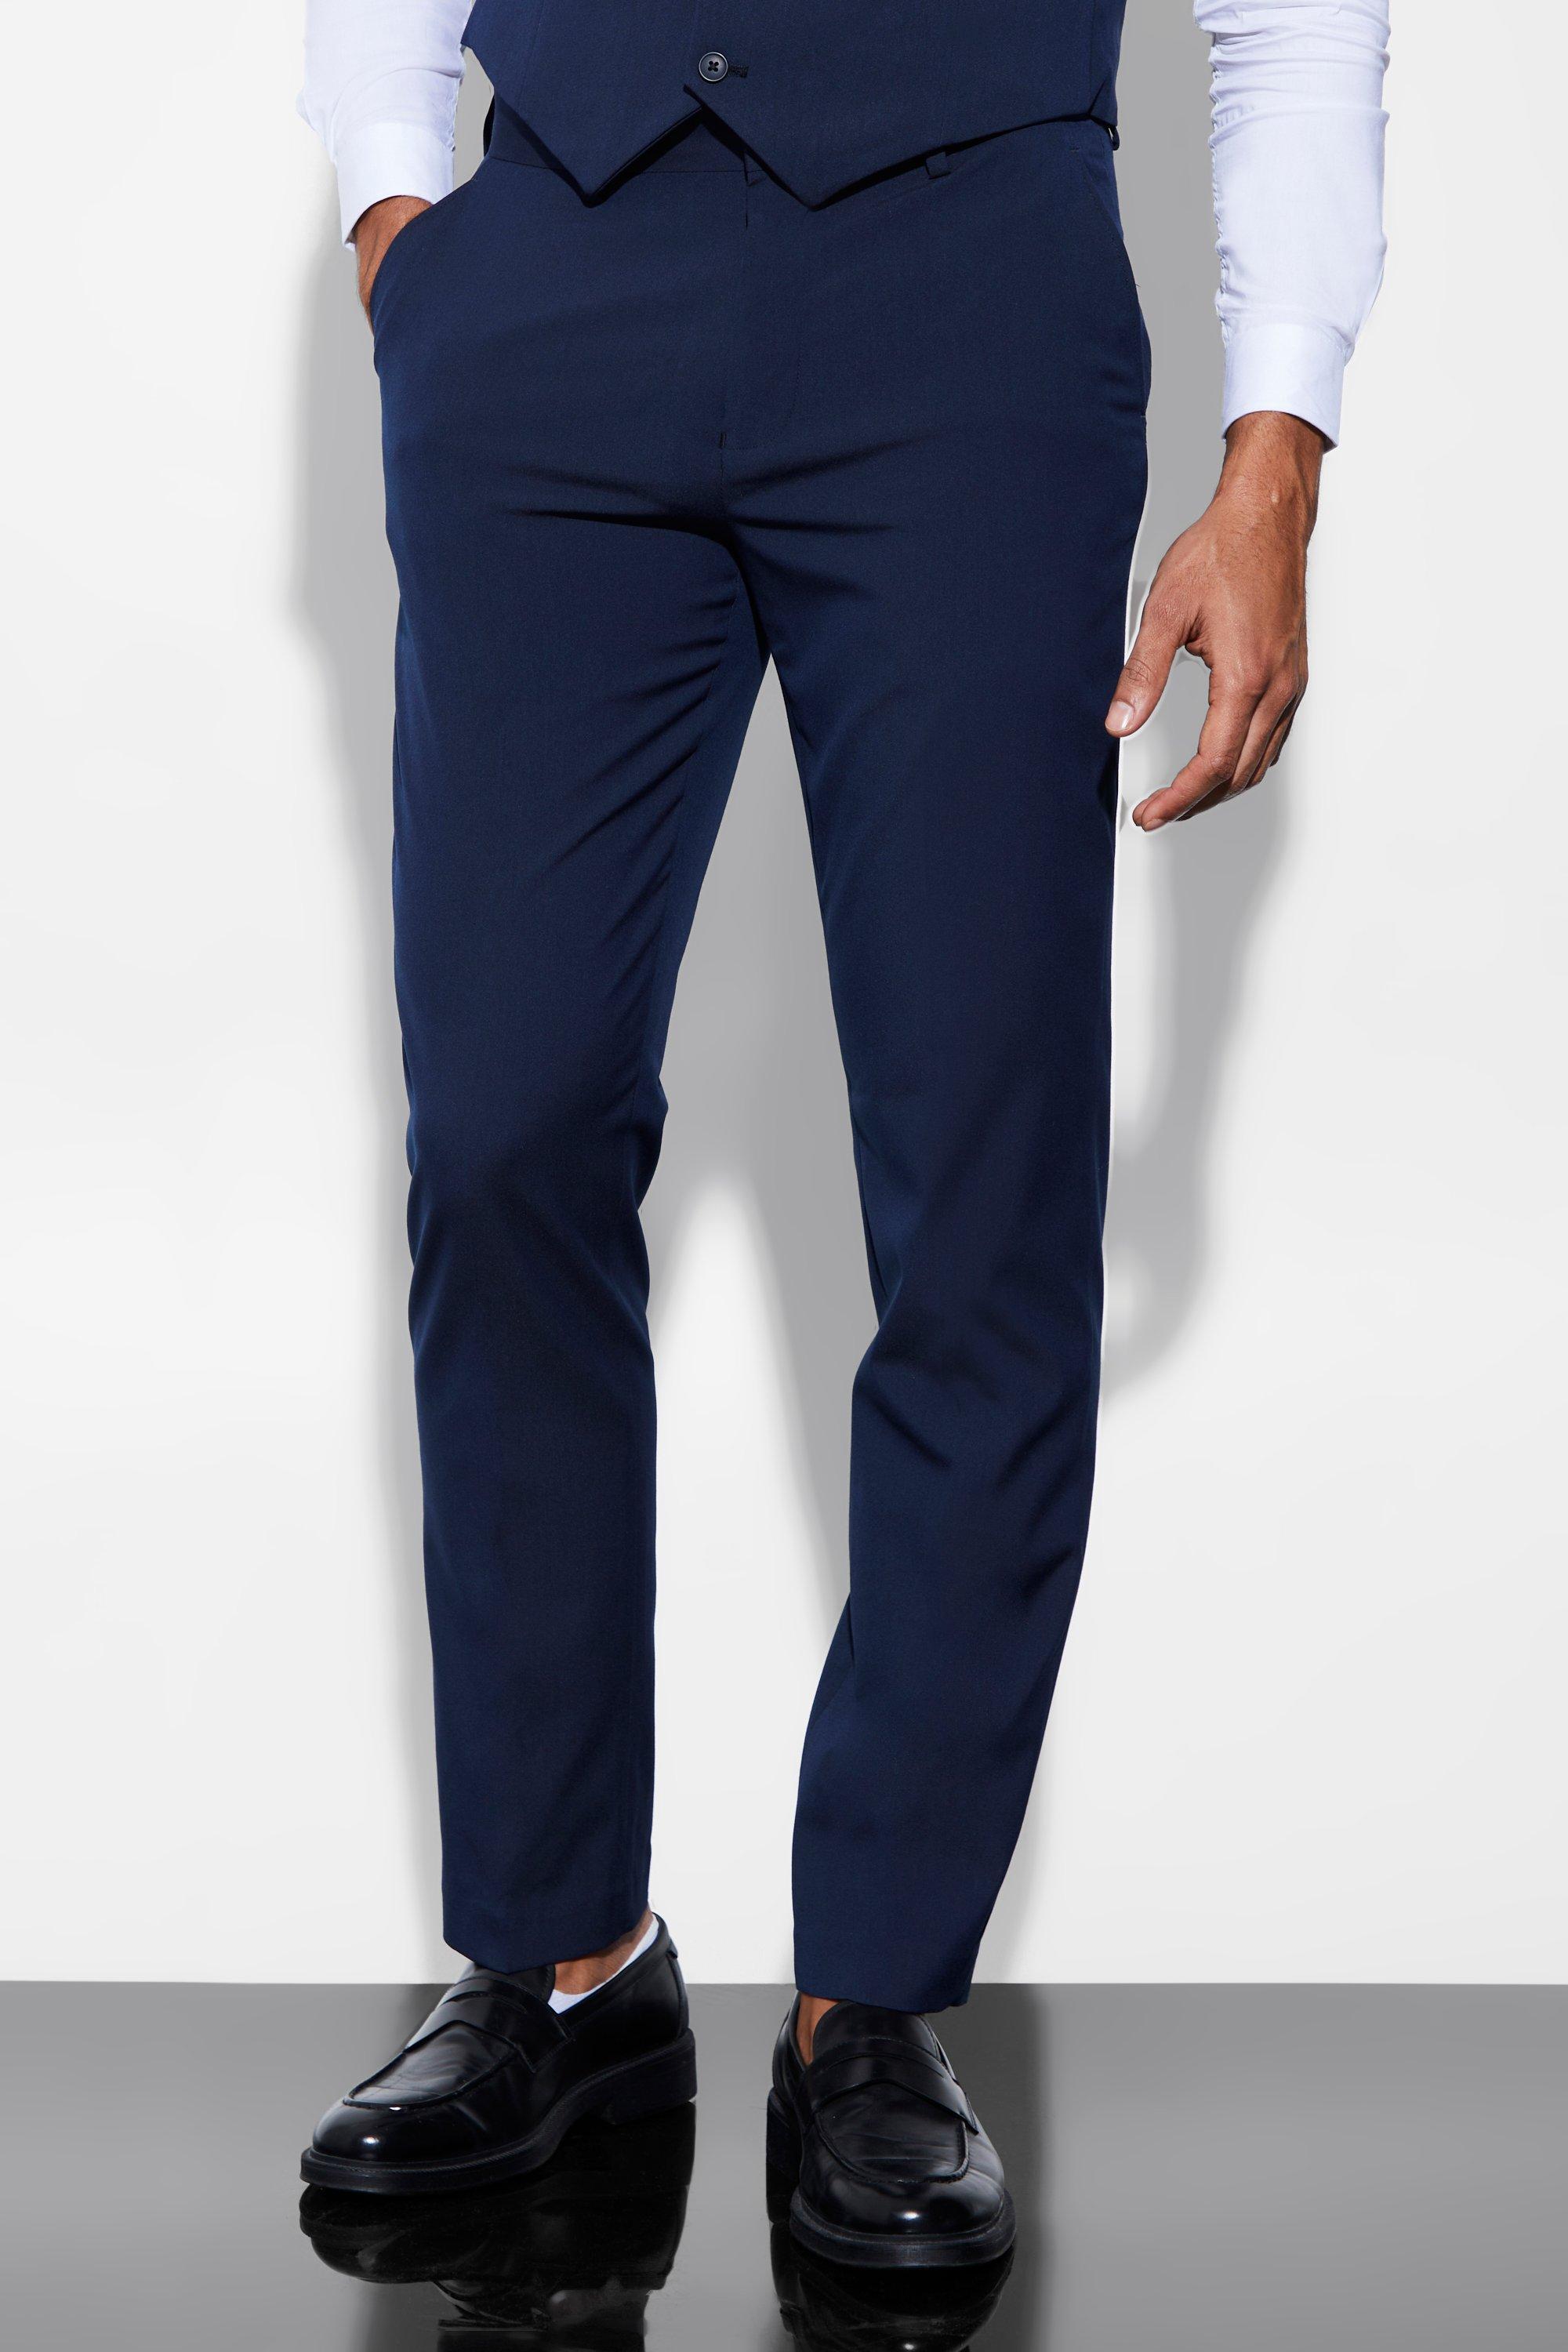 Image of Pantaloni completo Slim Fit, Navy